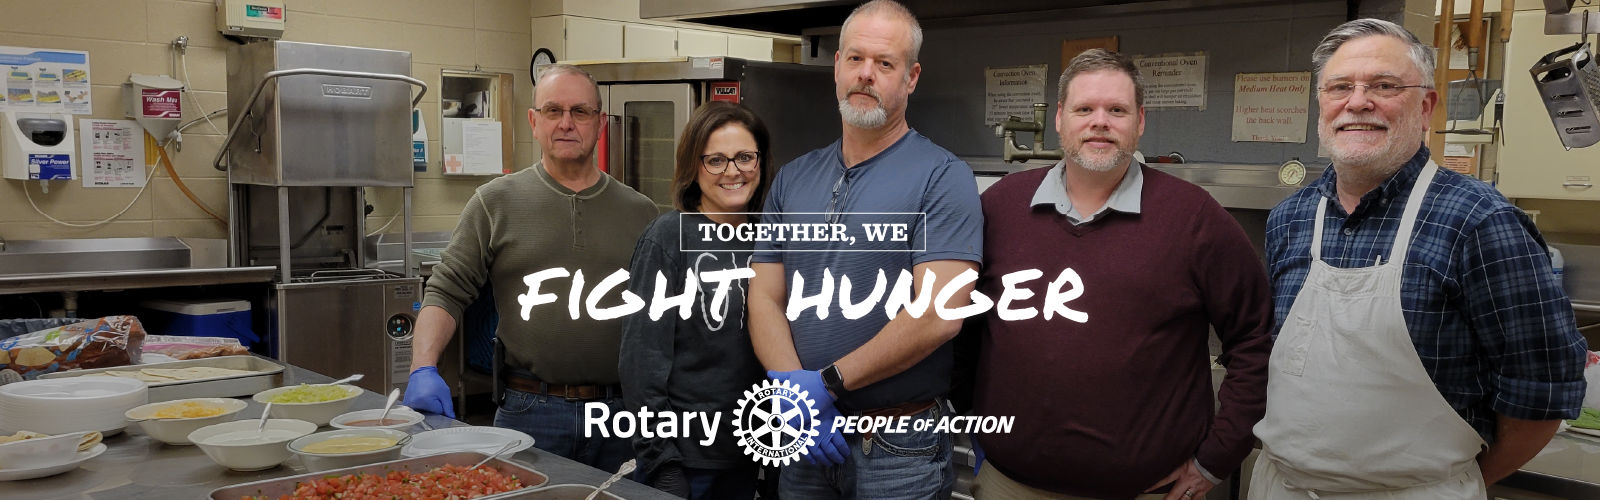 Bartlesville Daybreak Rotary Club - fight hunger